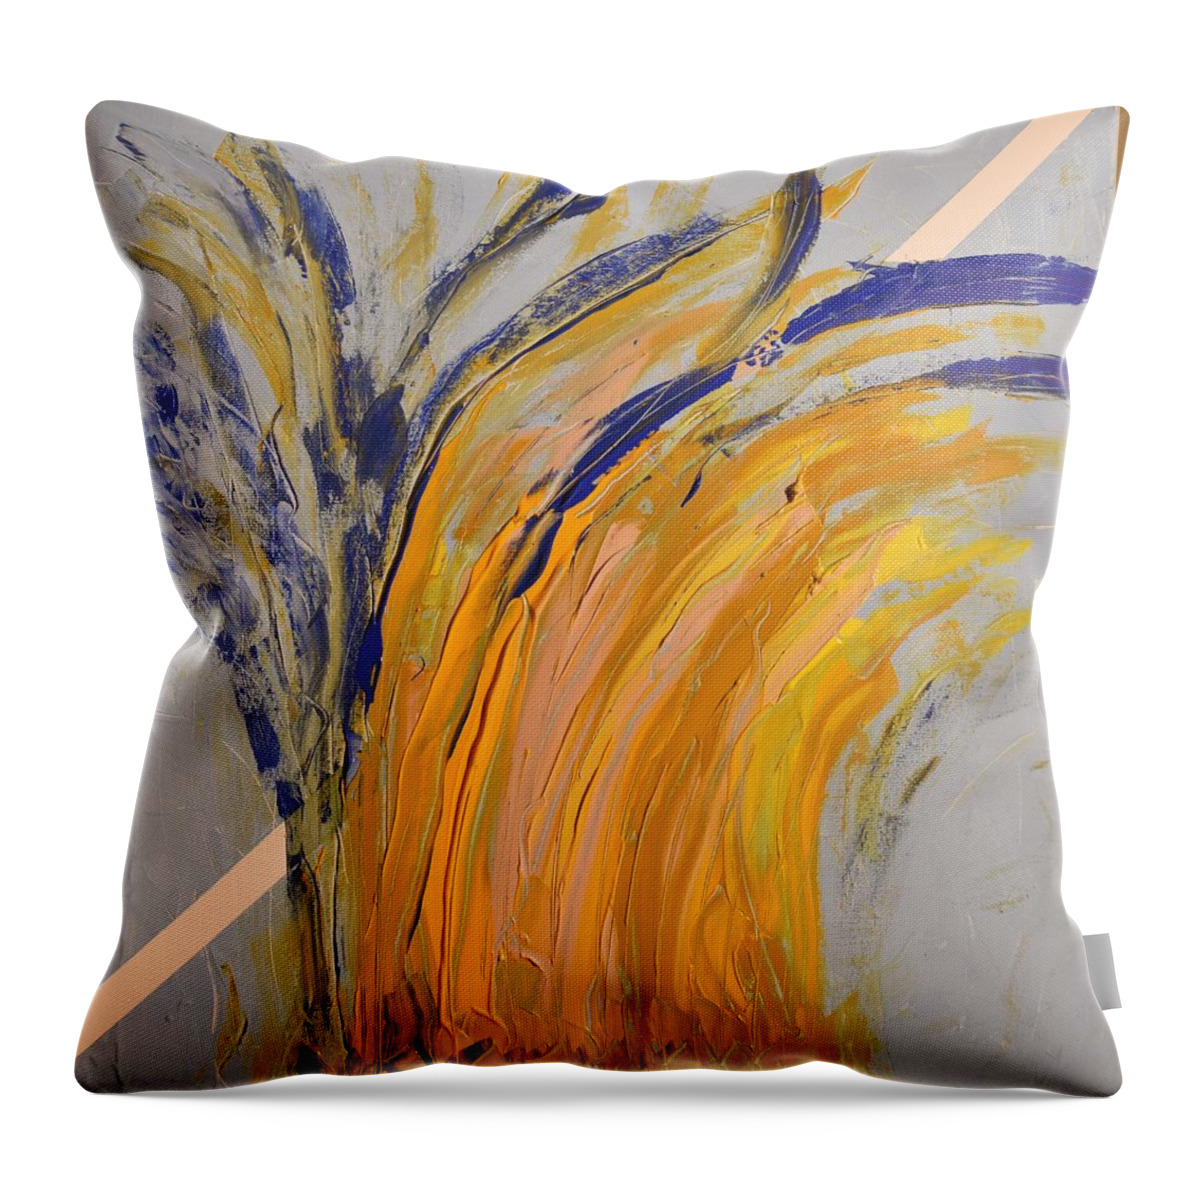 Colorado Throw Pillow featuring the painting Bursting by Pam O'Mara